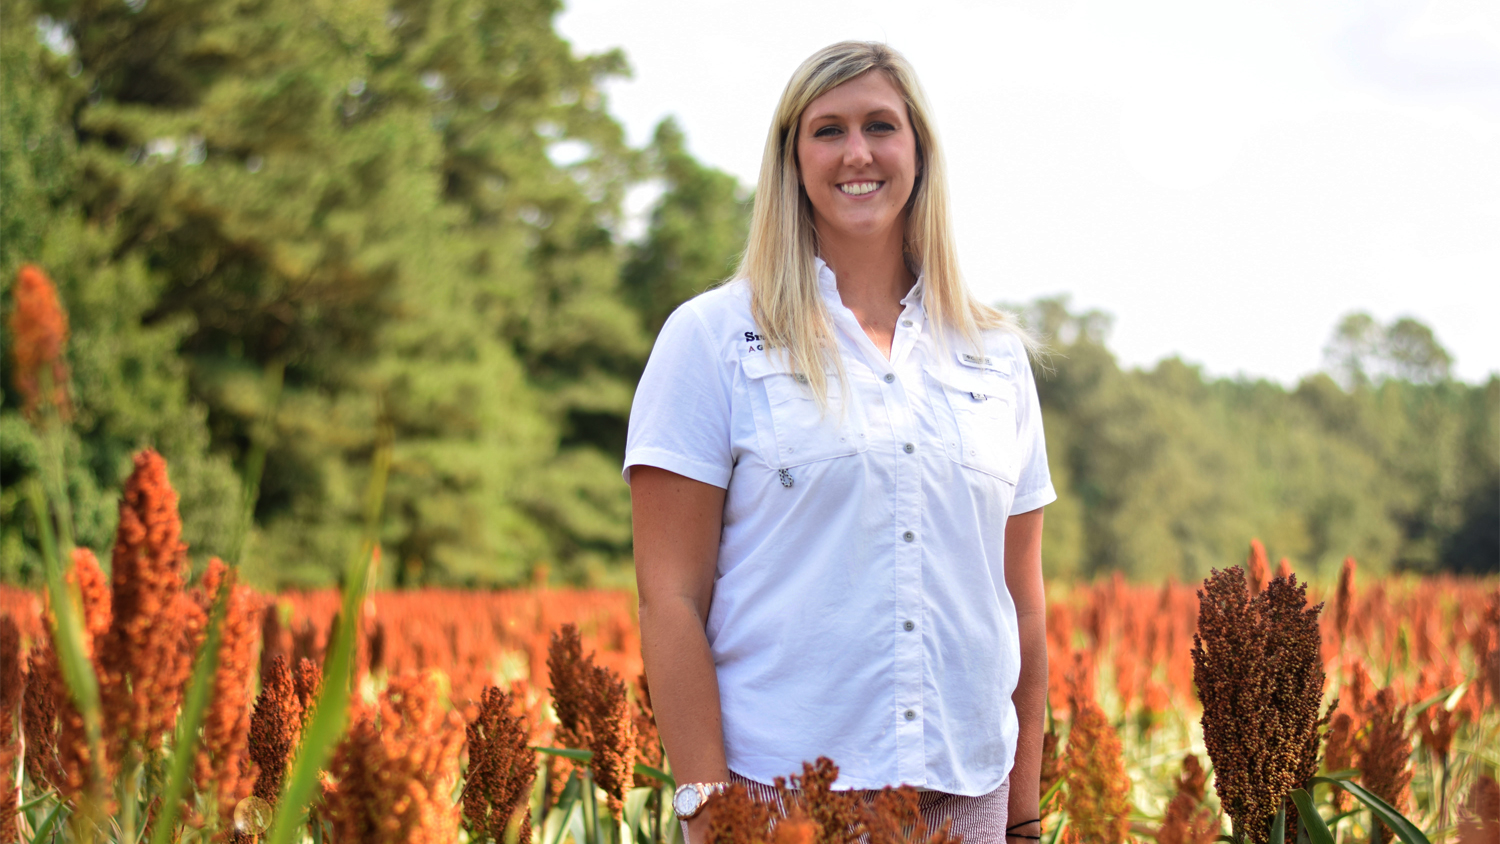 CALS alumni Rachel Grantham is now an agronomist at Smithfield.